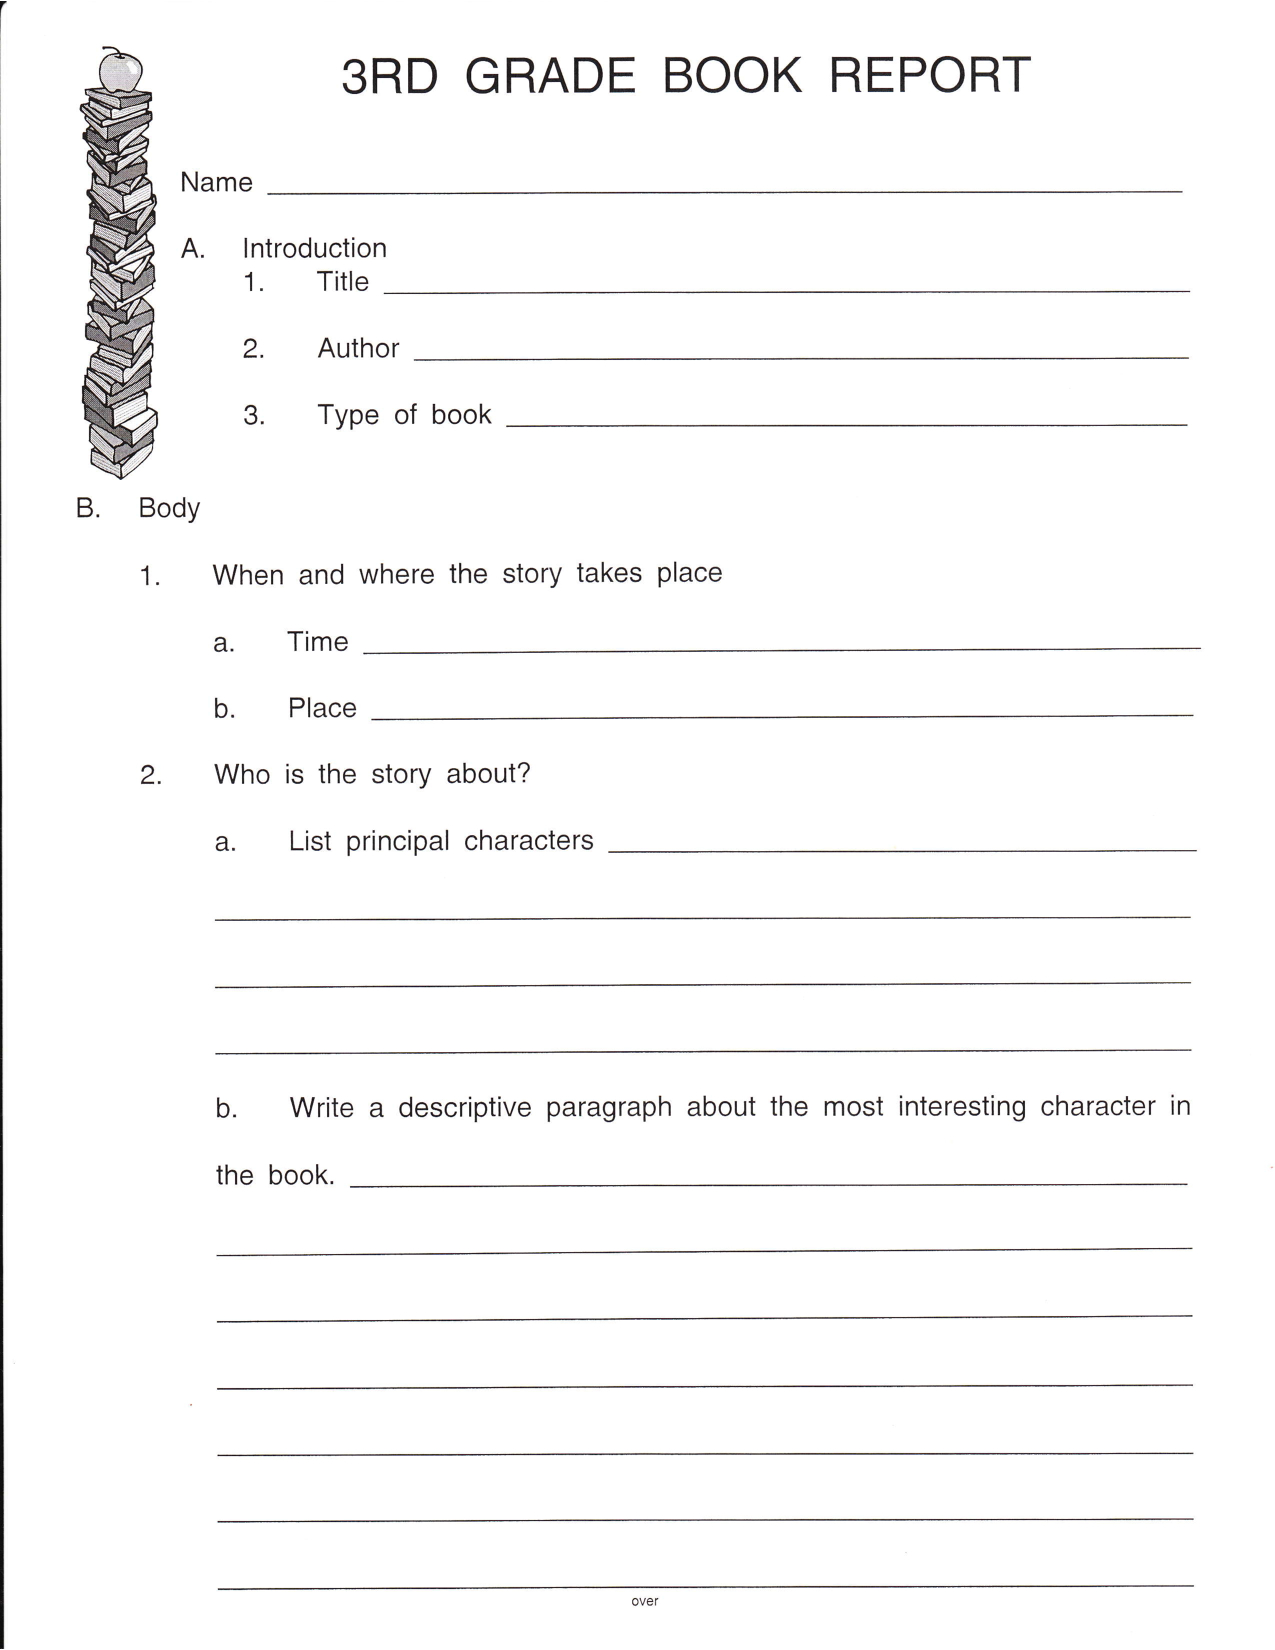 Pinshelena Schweitzer On Classroom Reading | Book Report In First Grade Book Report Template